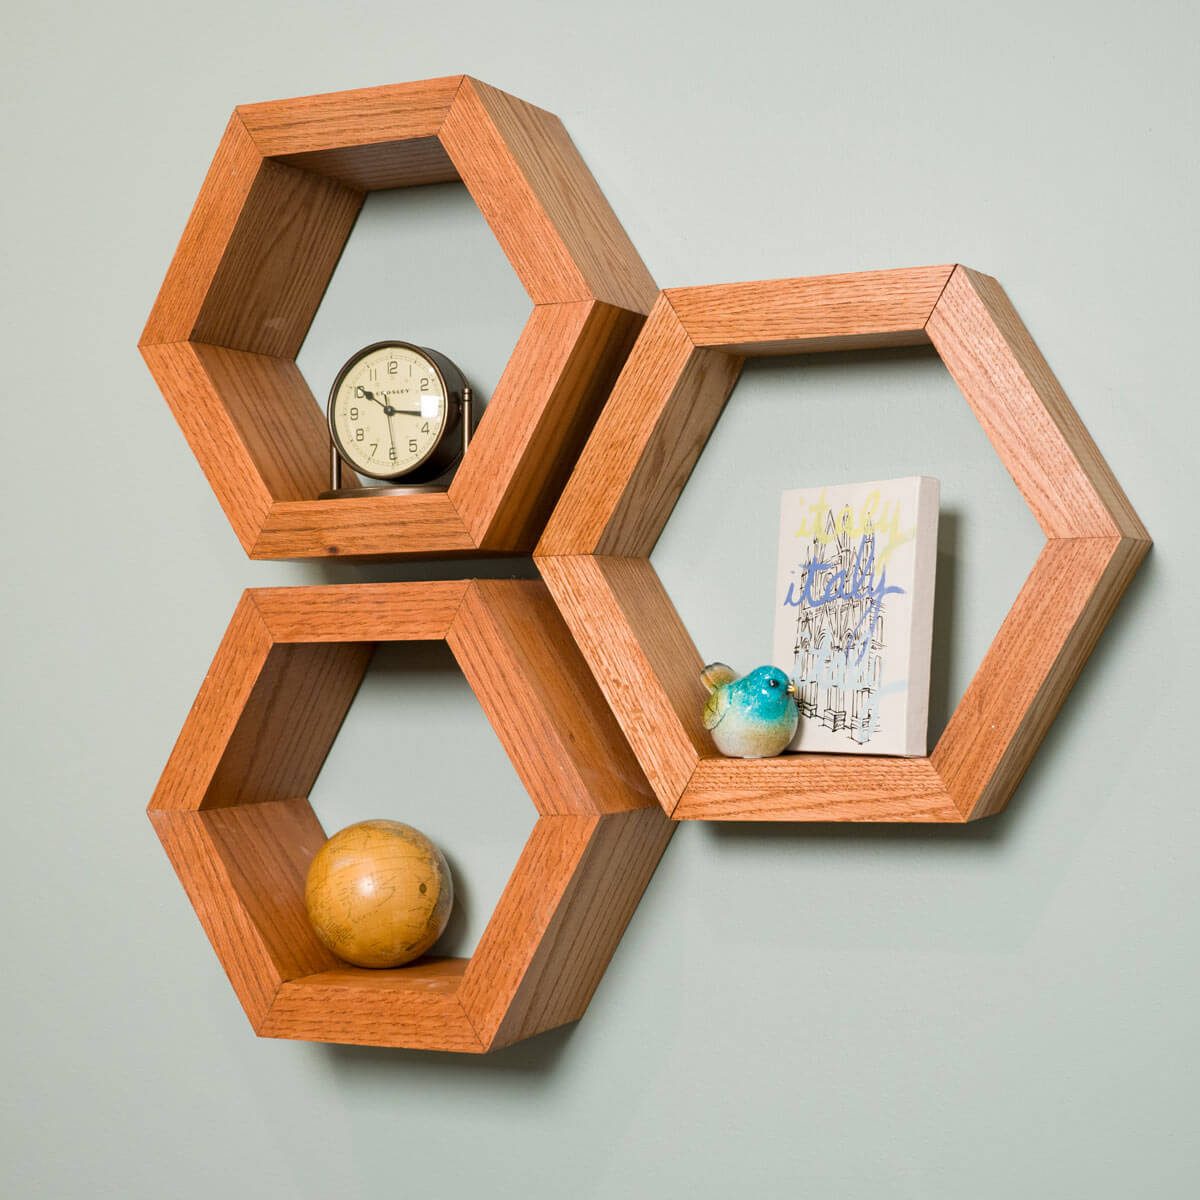 Build Hexagon Shelves Diy, How To Make Hexagon Honeycomb Shelving Units